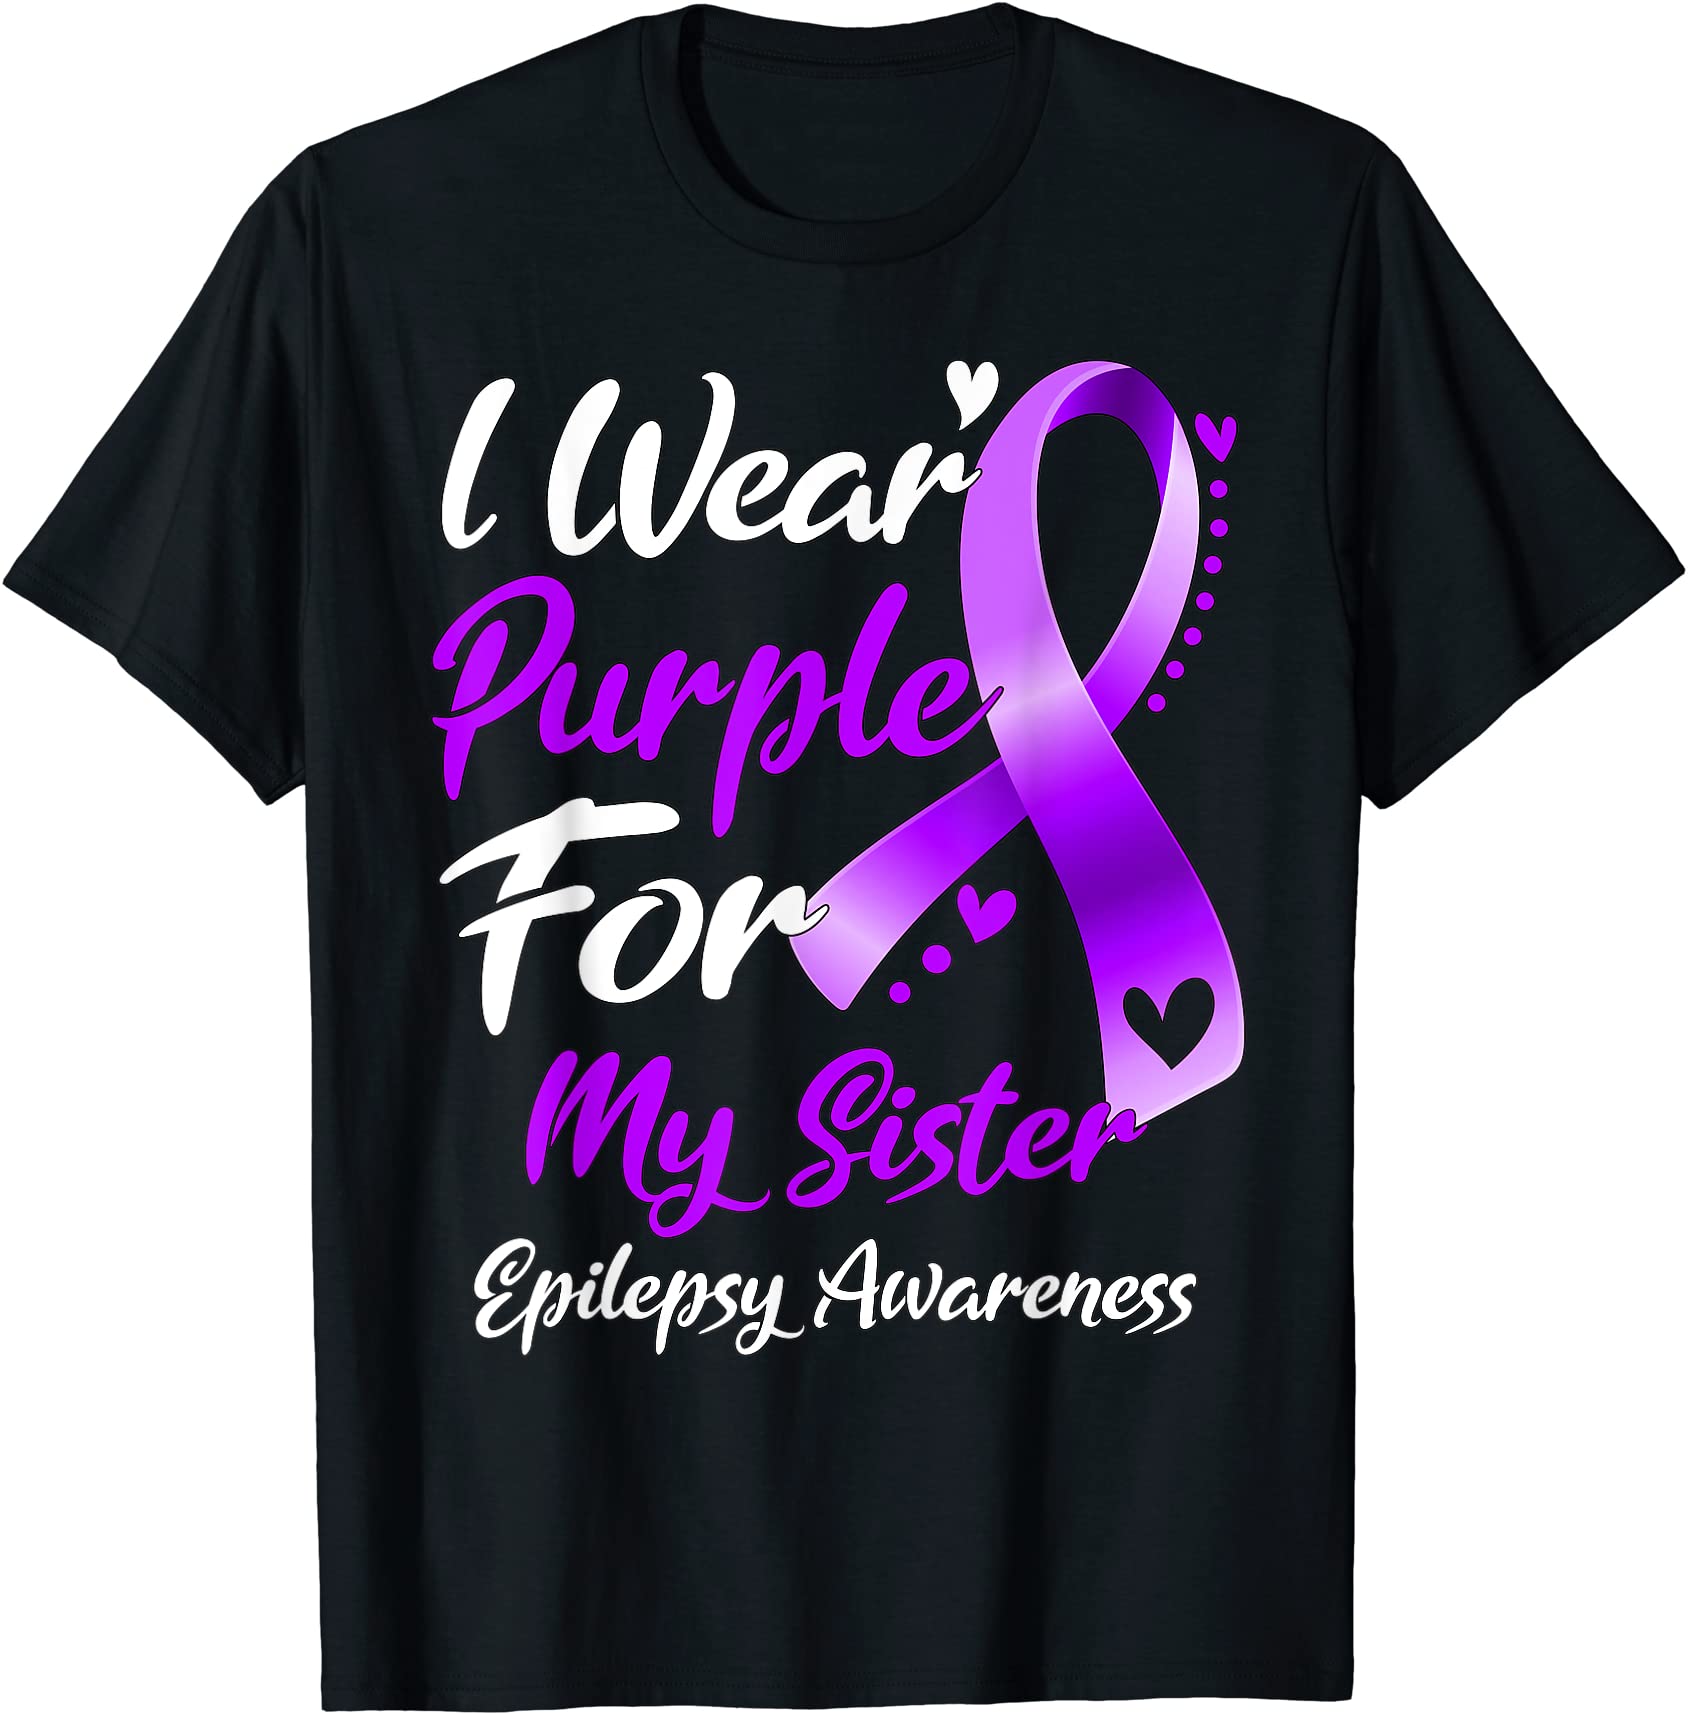 i wear purple for my sister epilepsy awareness gifts t shirt men - Buy ...